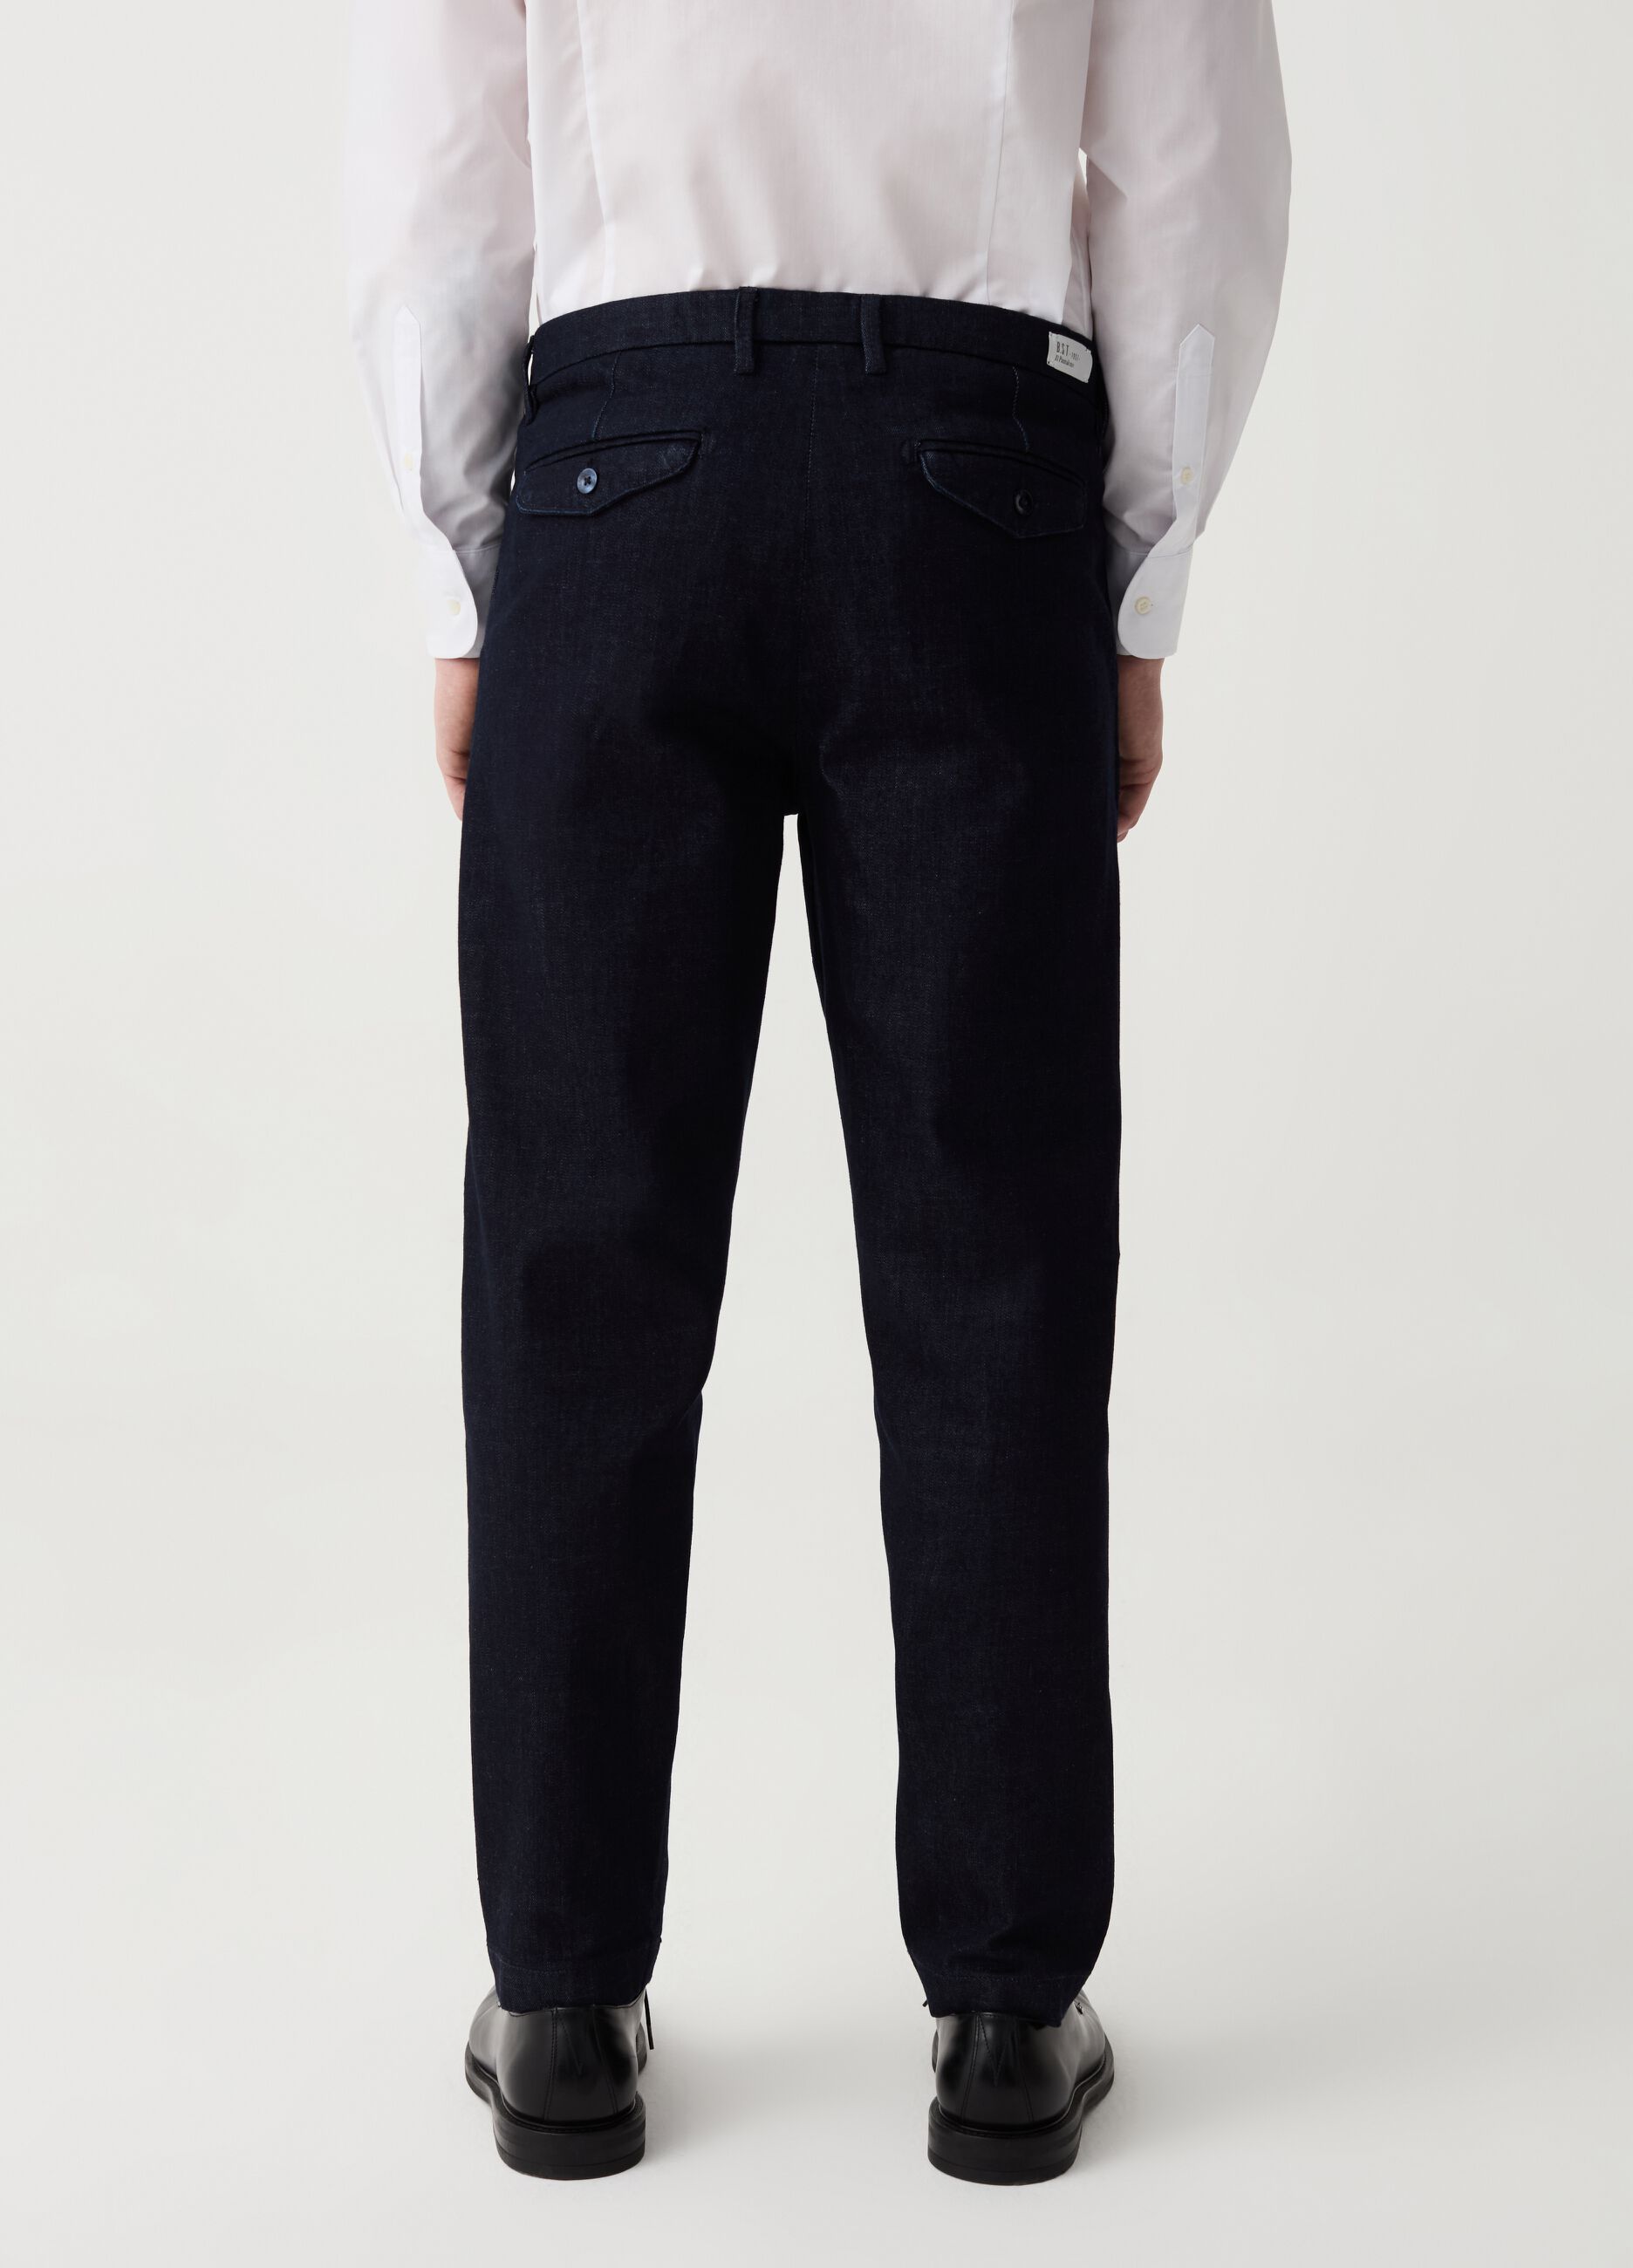 Pantalone chino comfort fit in denim B.ST 1957